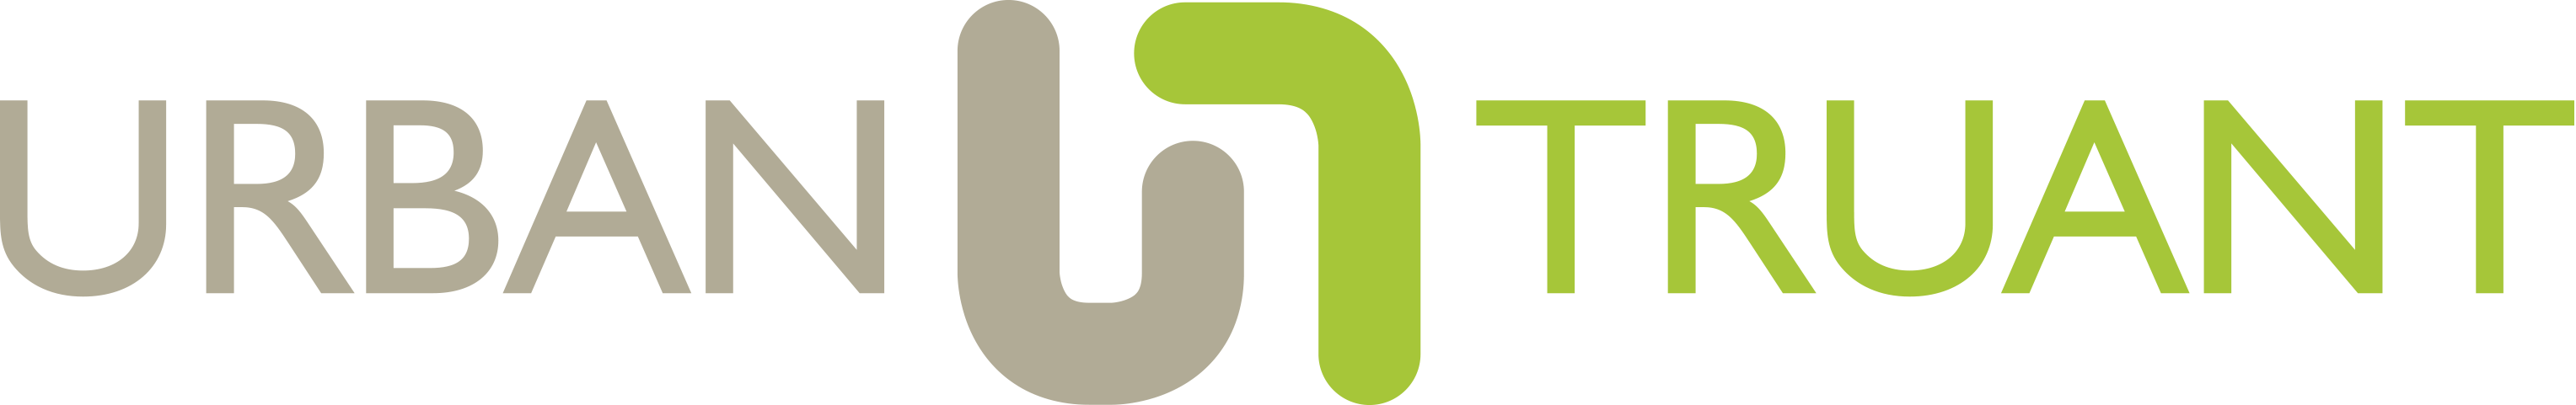 Urban Truant Logo